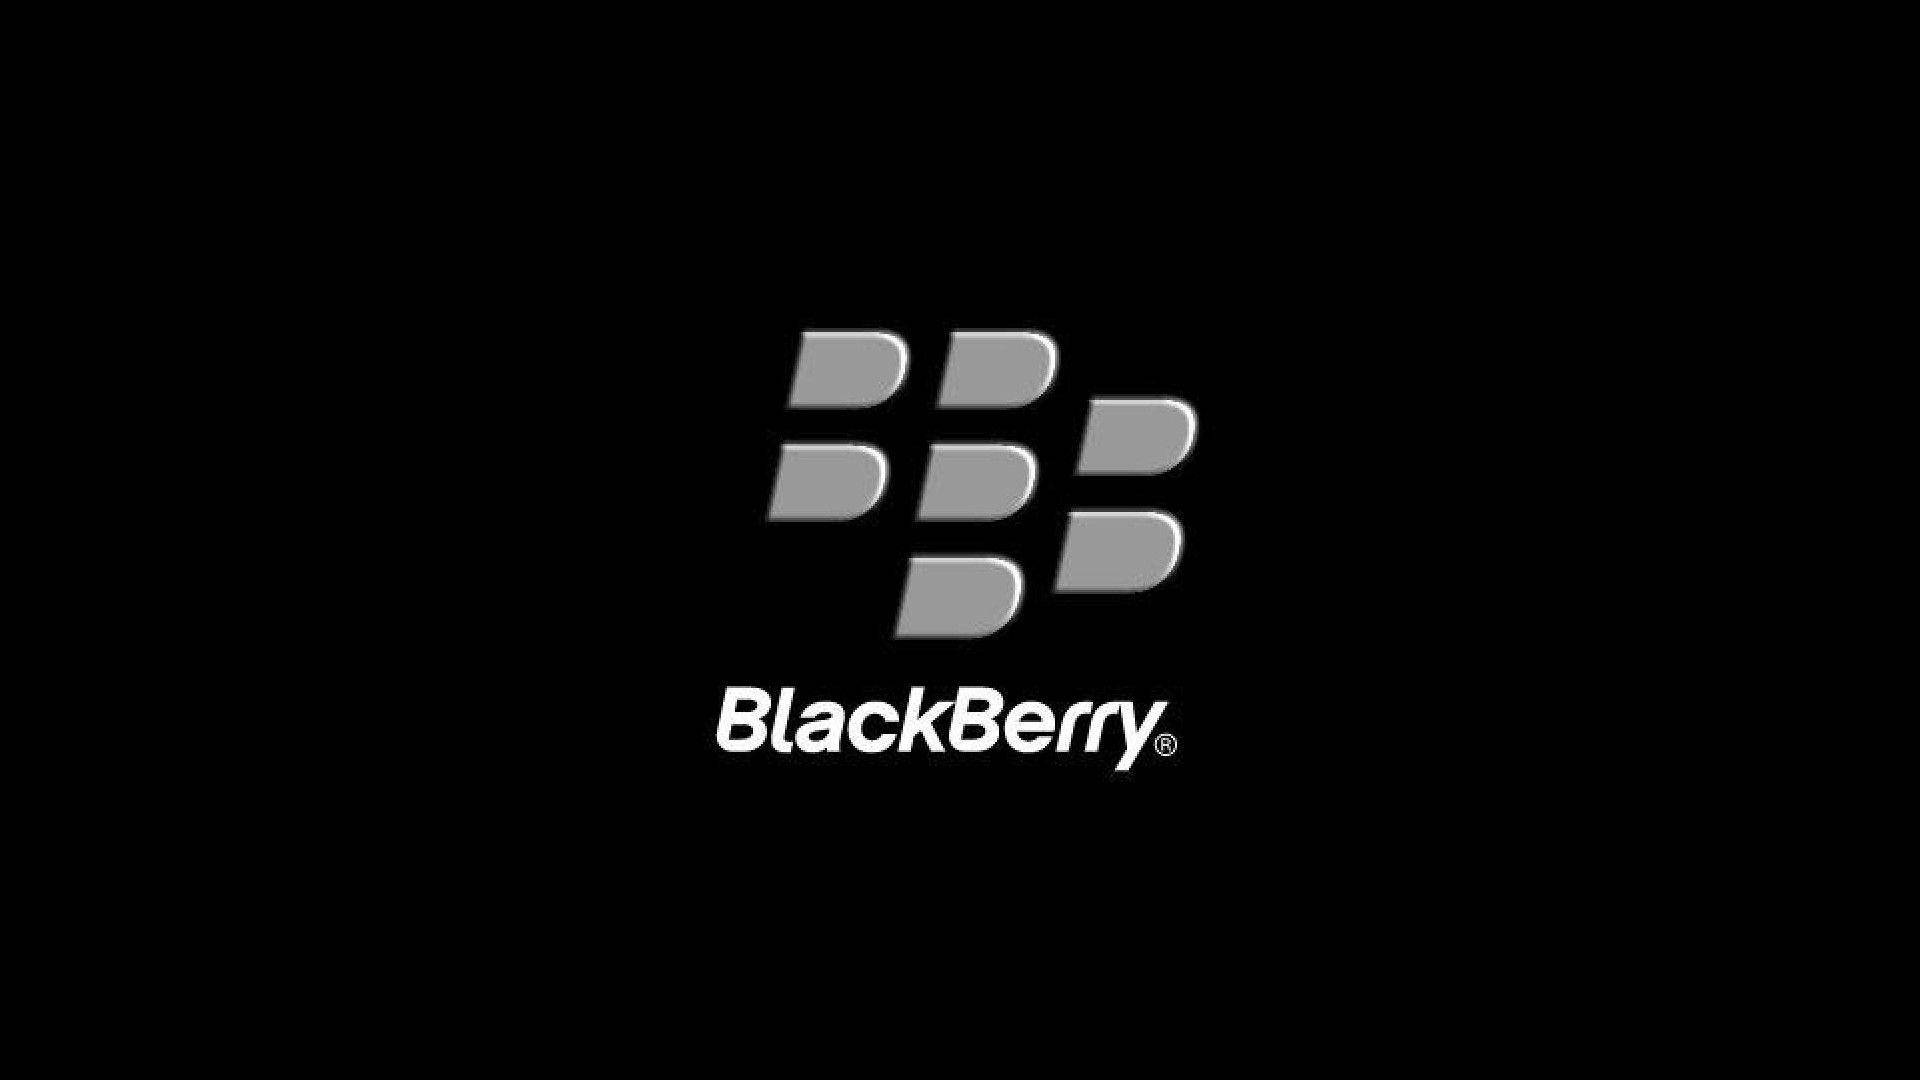 Blackberrygrau Schwarzes Logo Wallpaper